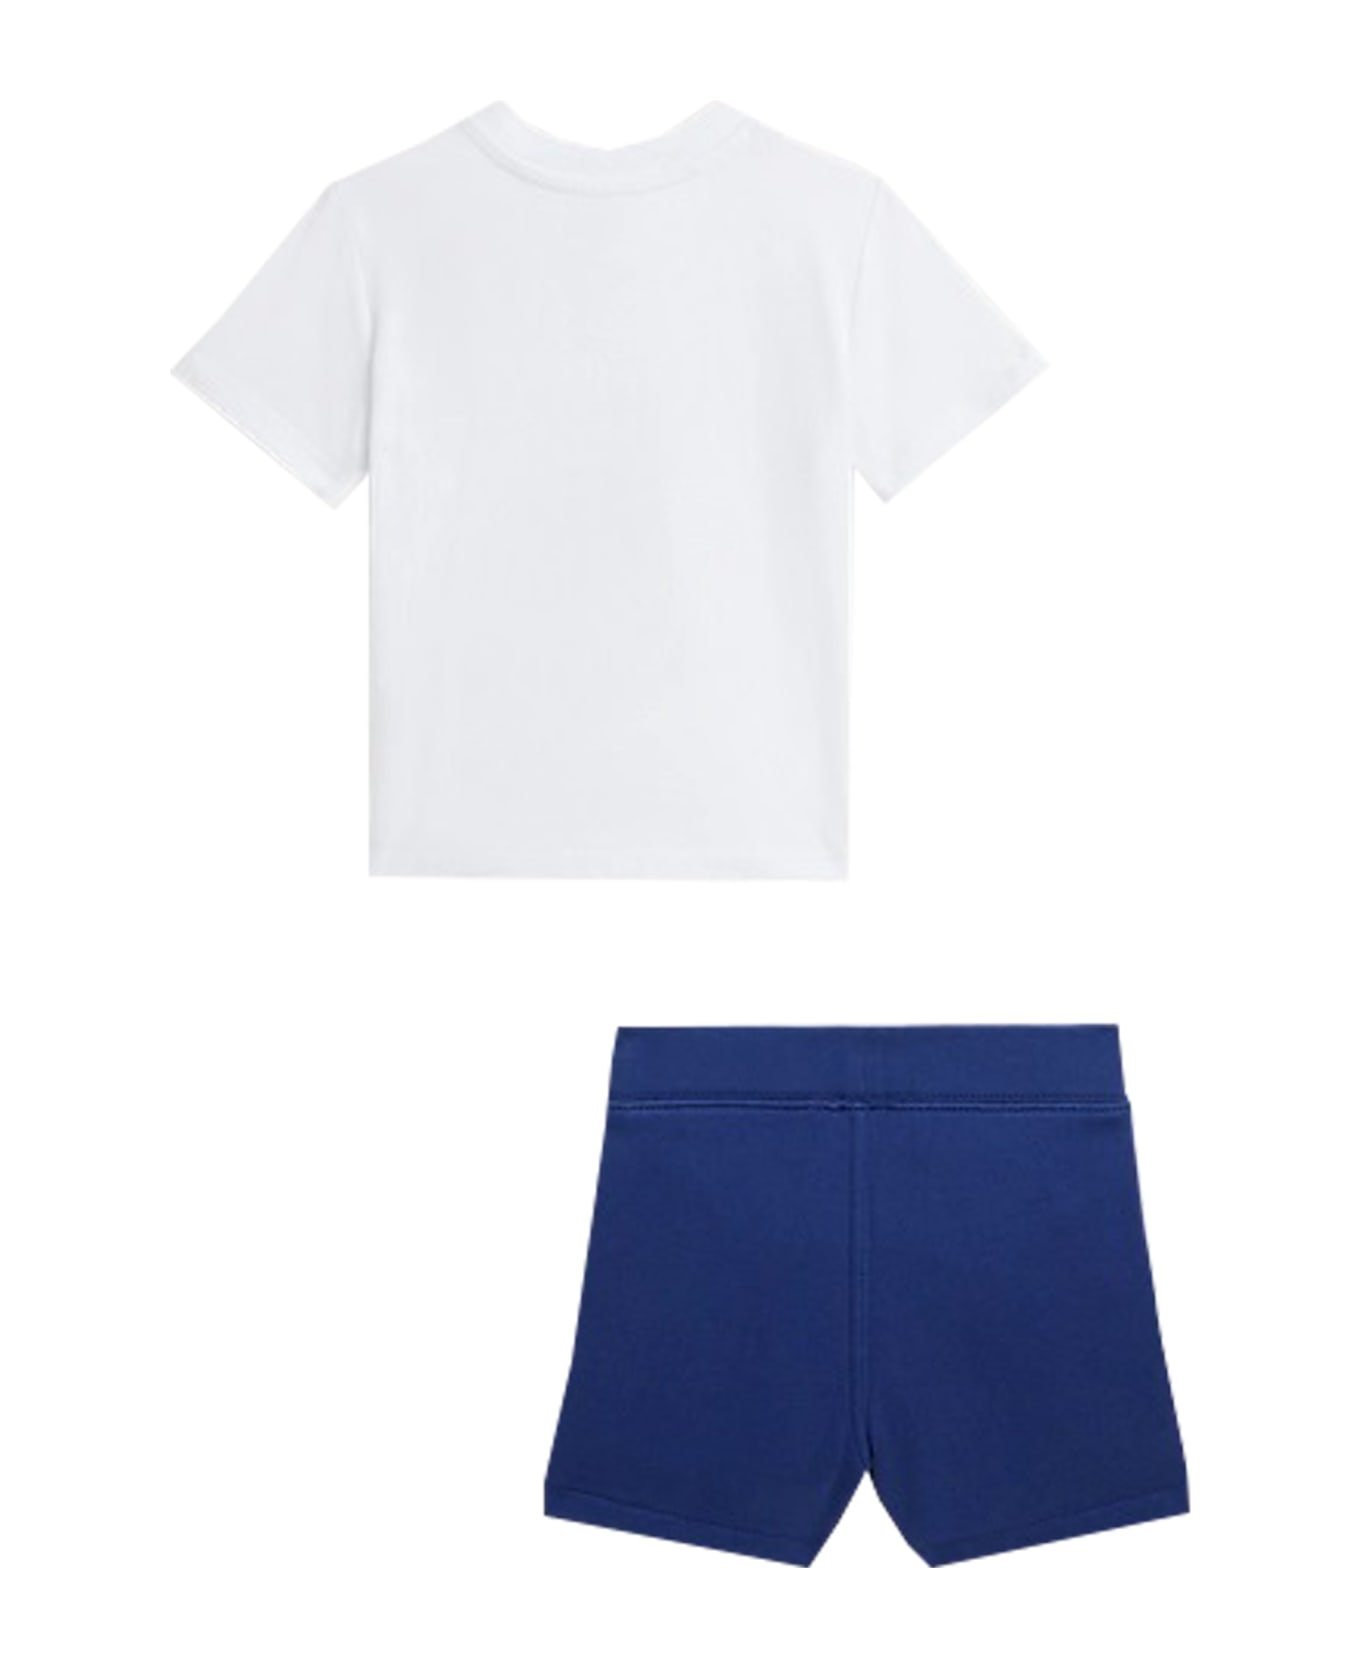 Ralph Lauren Cotton T-shirt And Short - White